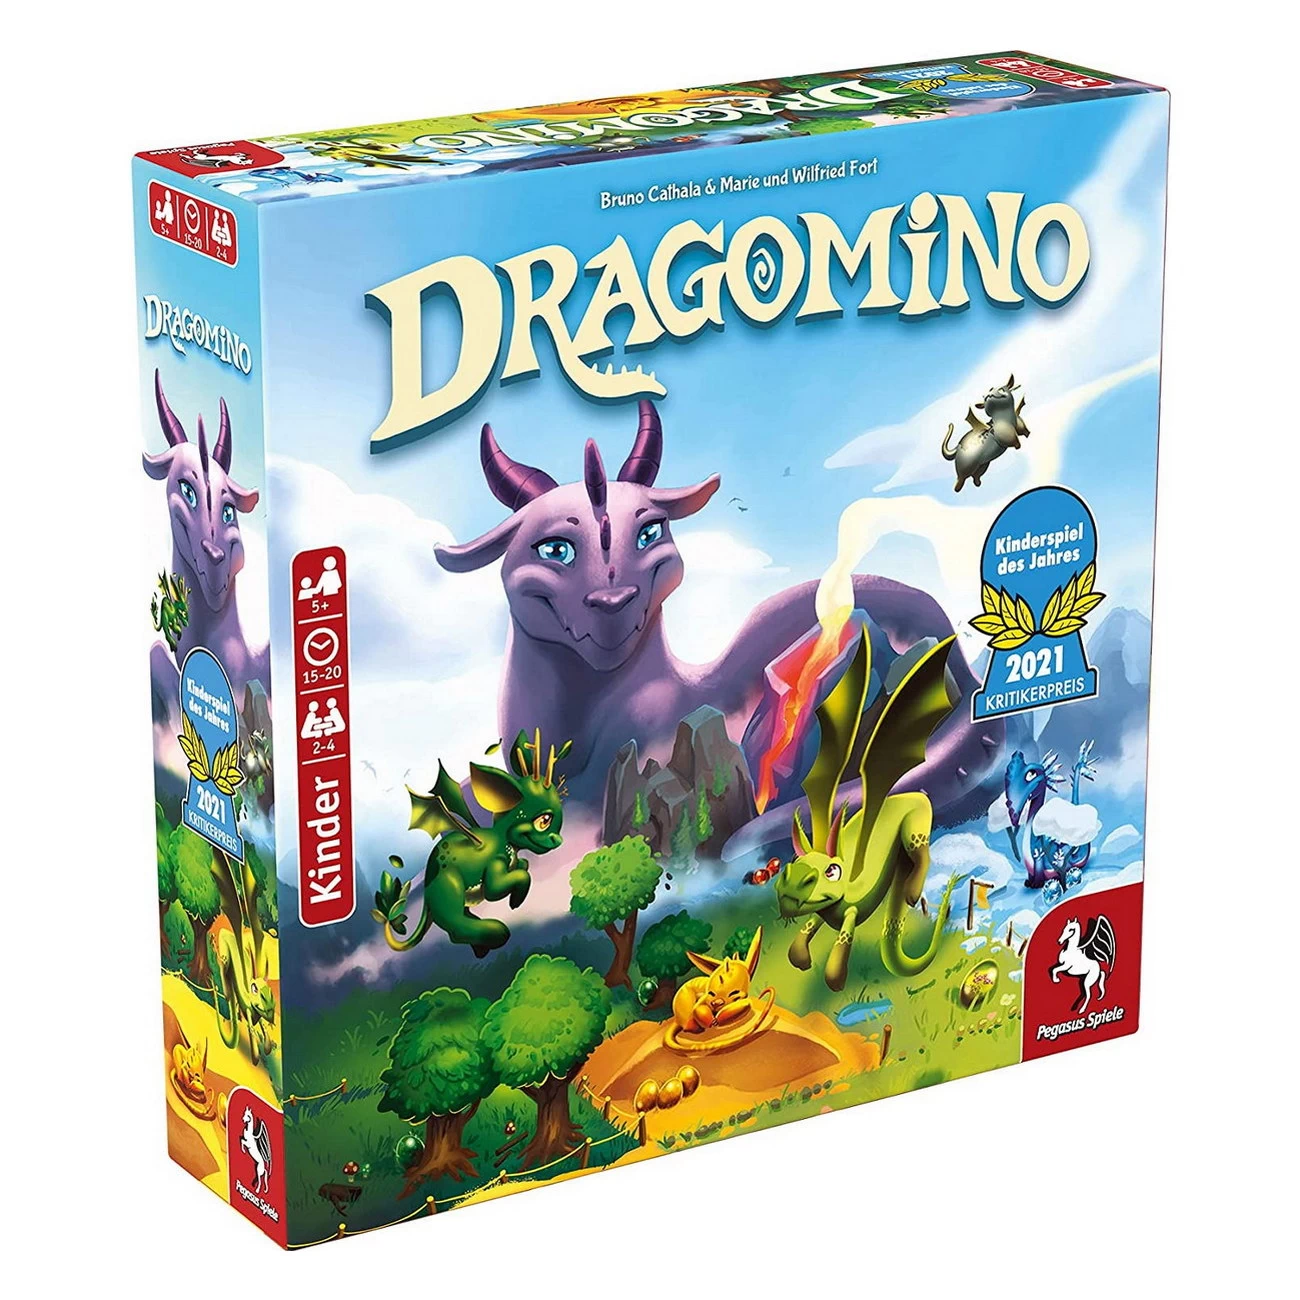 Dragomino Kinderspiel des Jahres 2021 (Pegasus-Spiele 57111)